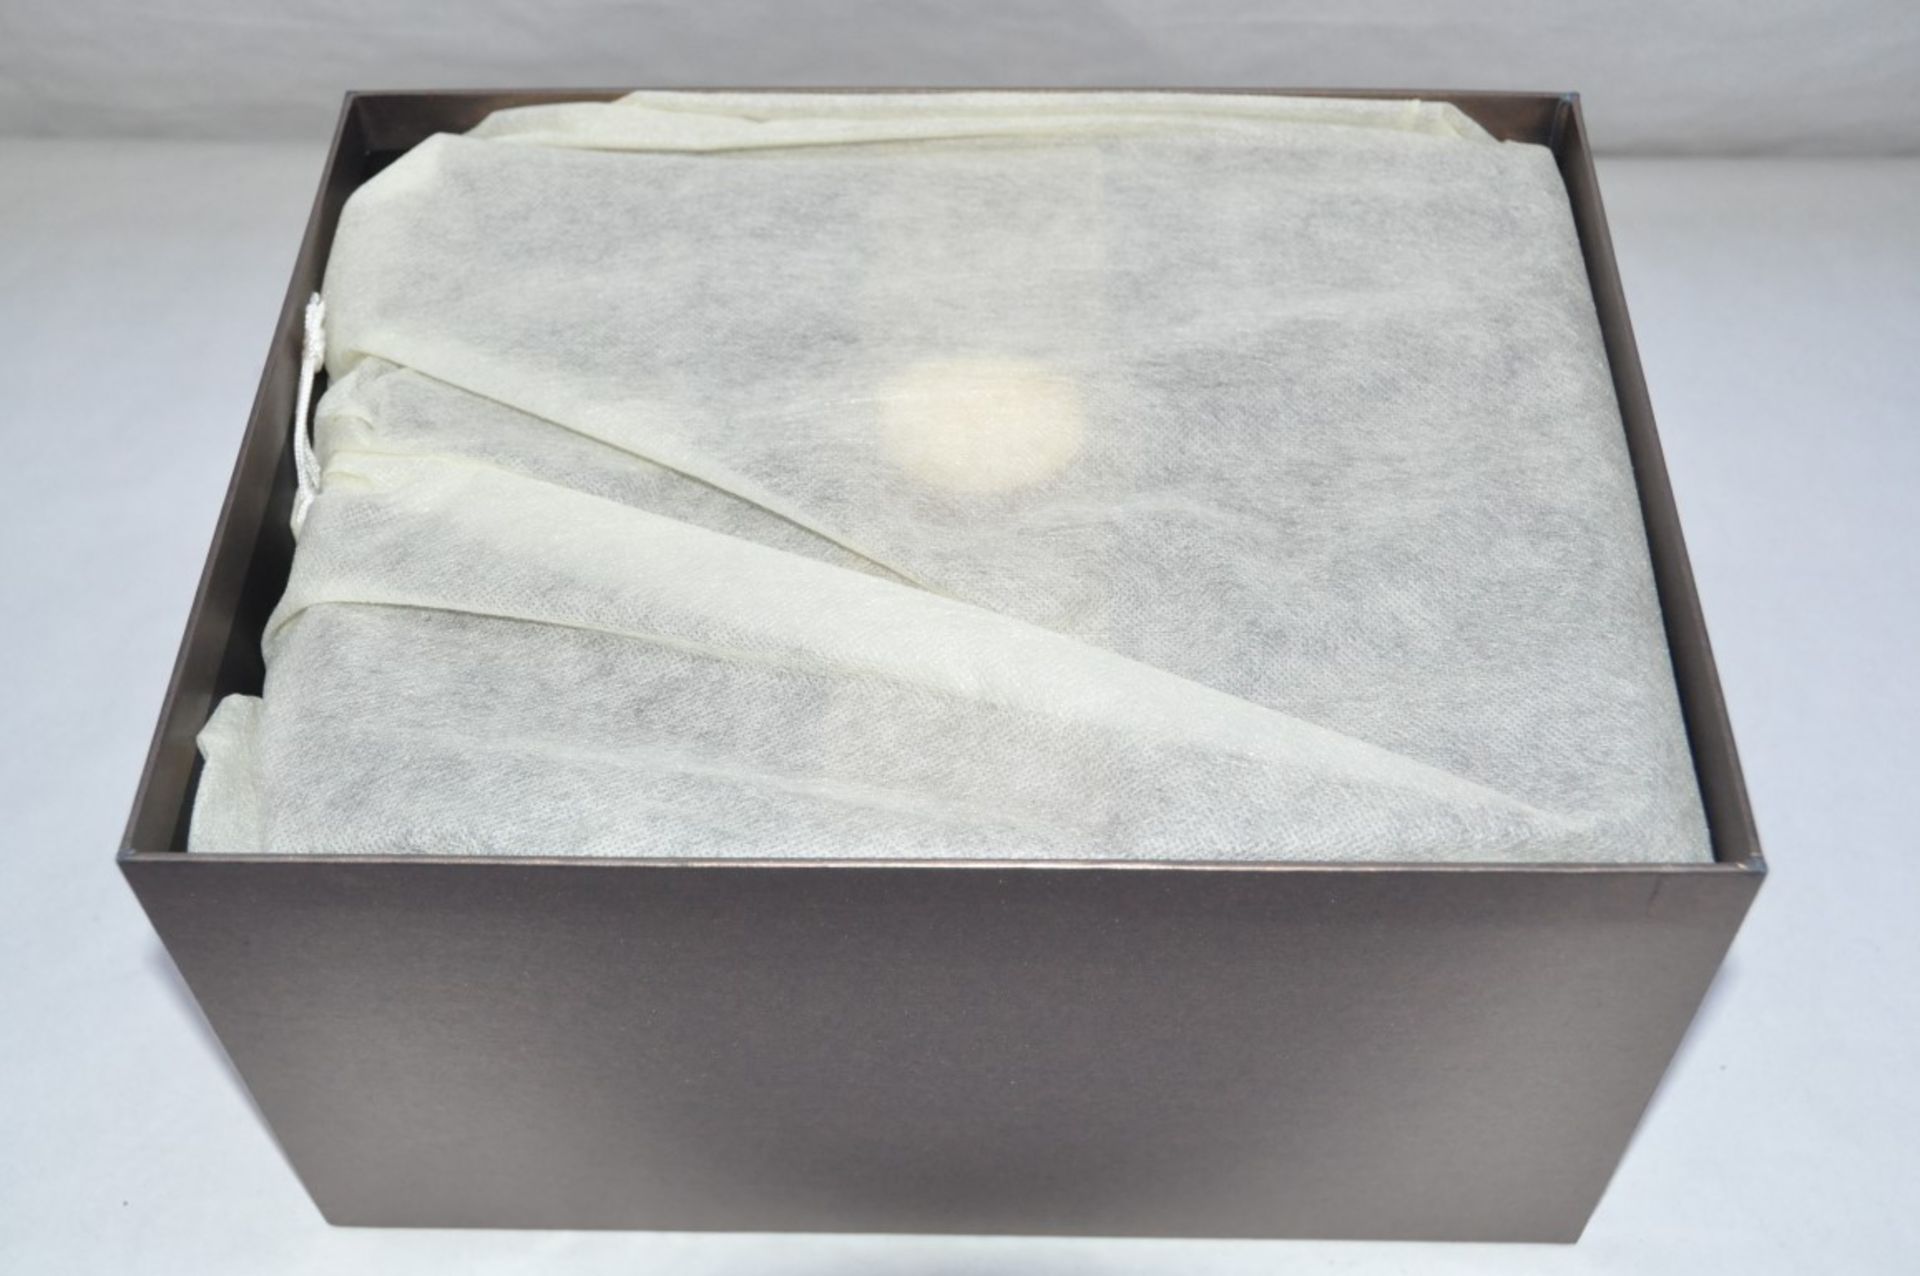 1 x "AB Collezioni" Italian Genuine Leather & Suede Luxury Jewellery Box (34044) - Ref LT000 - - Image 5 of 9